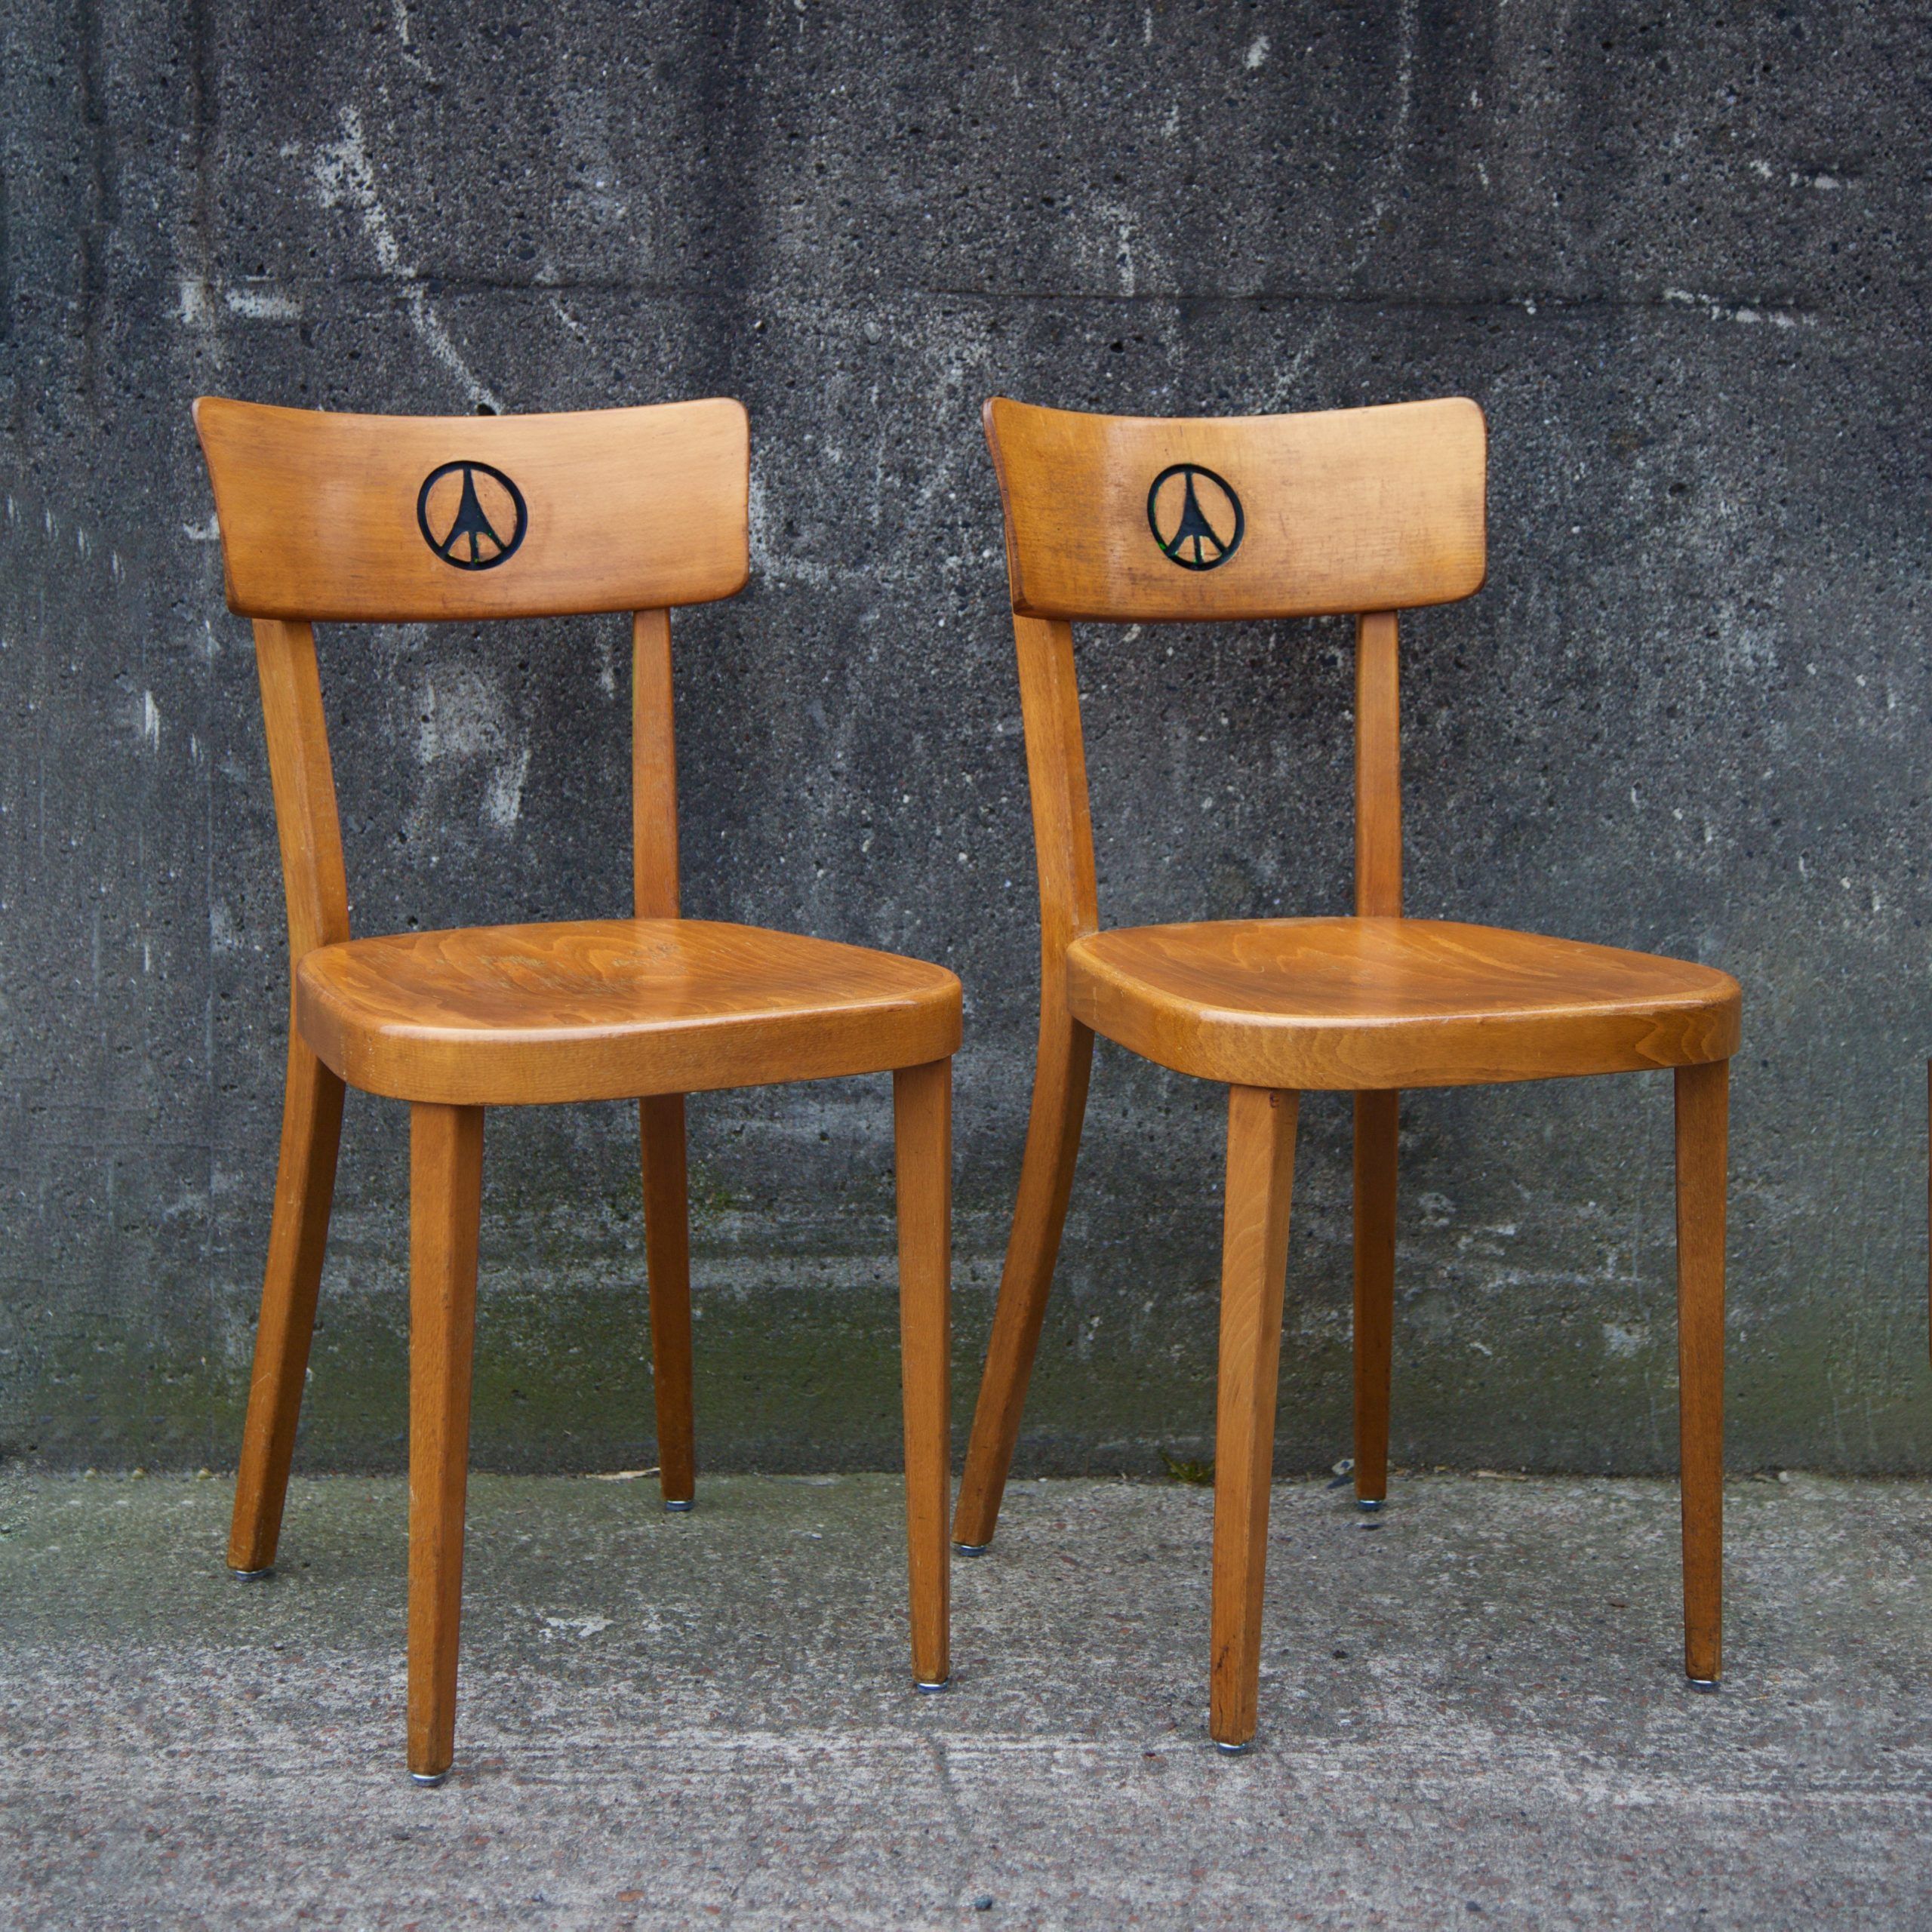 © Florian Borkenhagen 'Paris Chairs' courtesy ammann//gallery